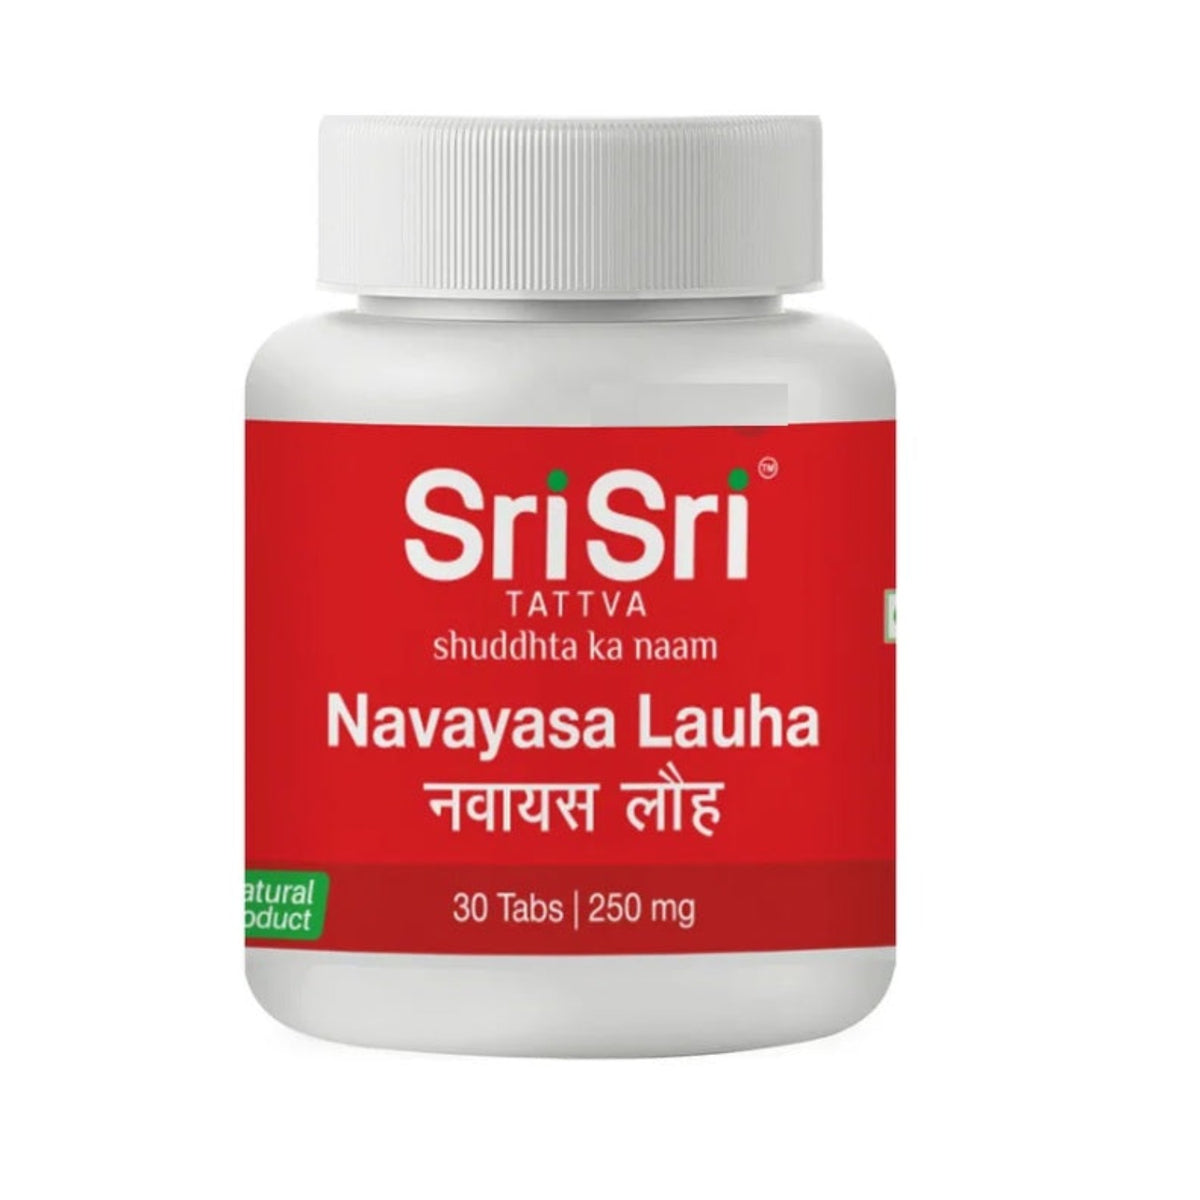 Sri Sri Tattva Ayurvedic Navayasa Lauha 250mg 30 Tablet